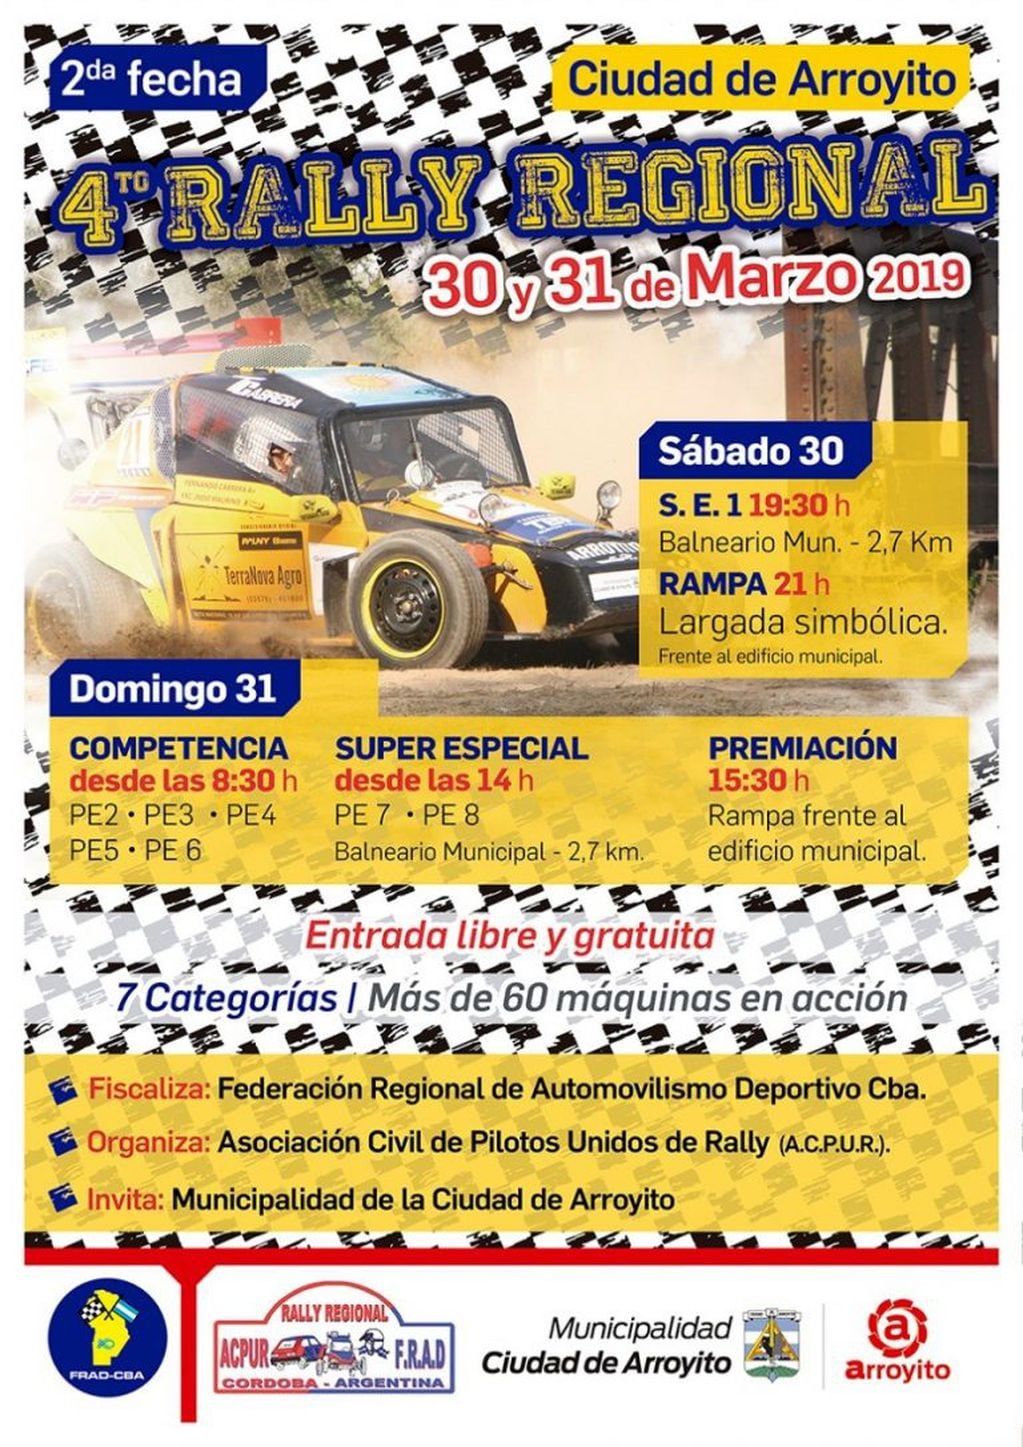 Rally regional fecha en Arroyito